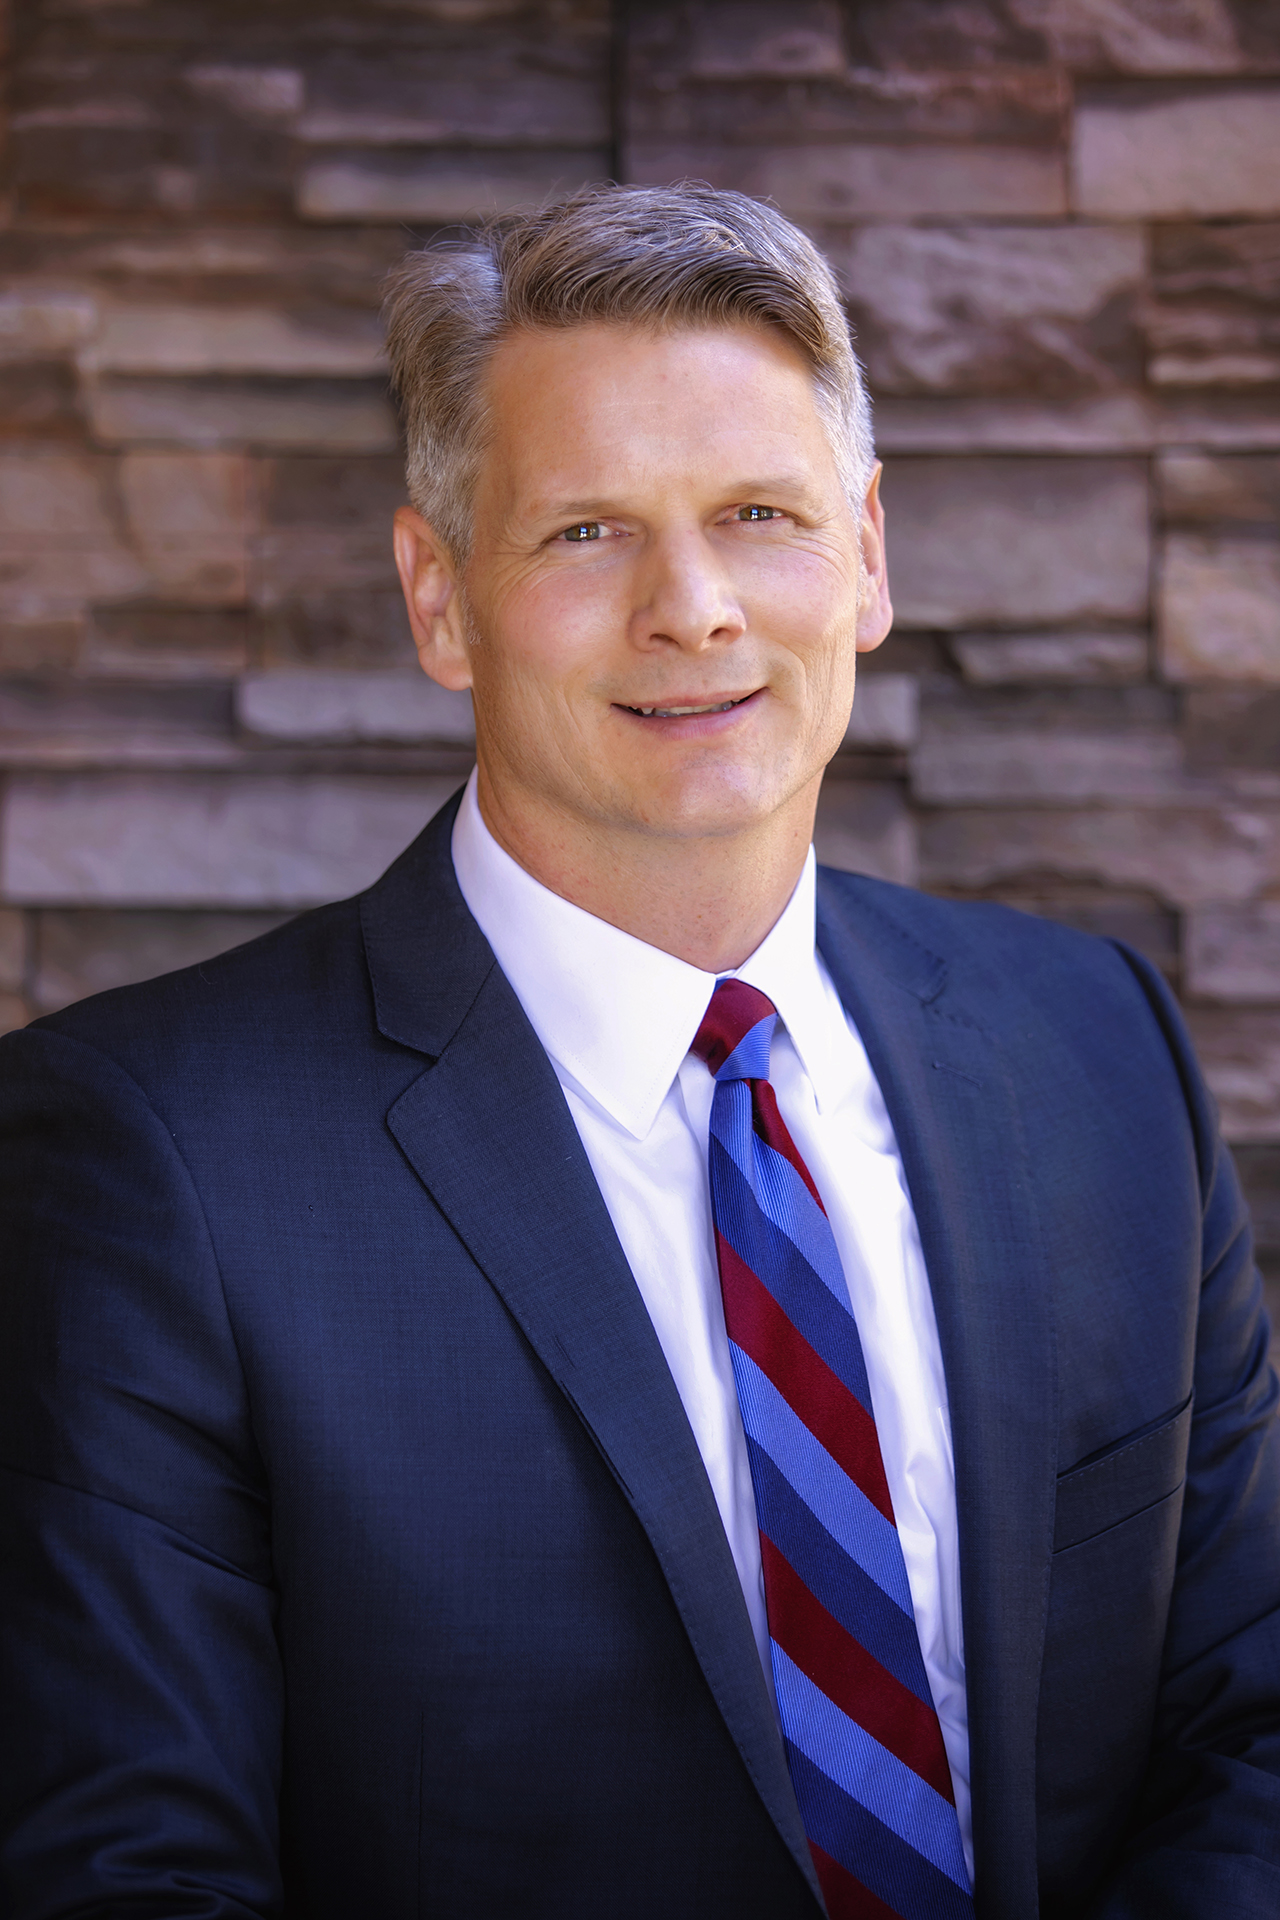 Alex Kjolsrud, AAMS® - Financial Advisor at Benjamin F. Edwards in Sierra Vista, AZ.